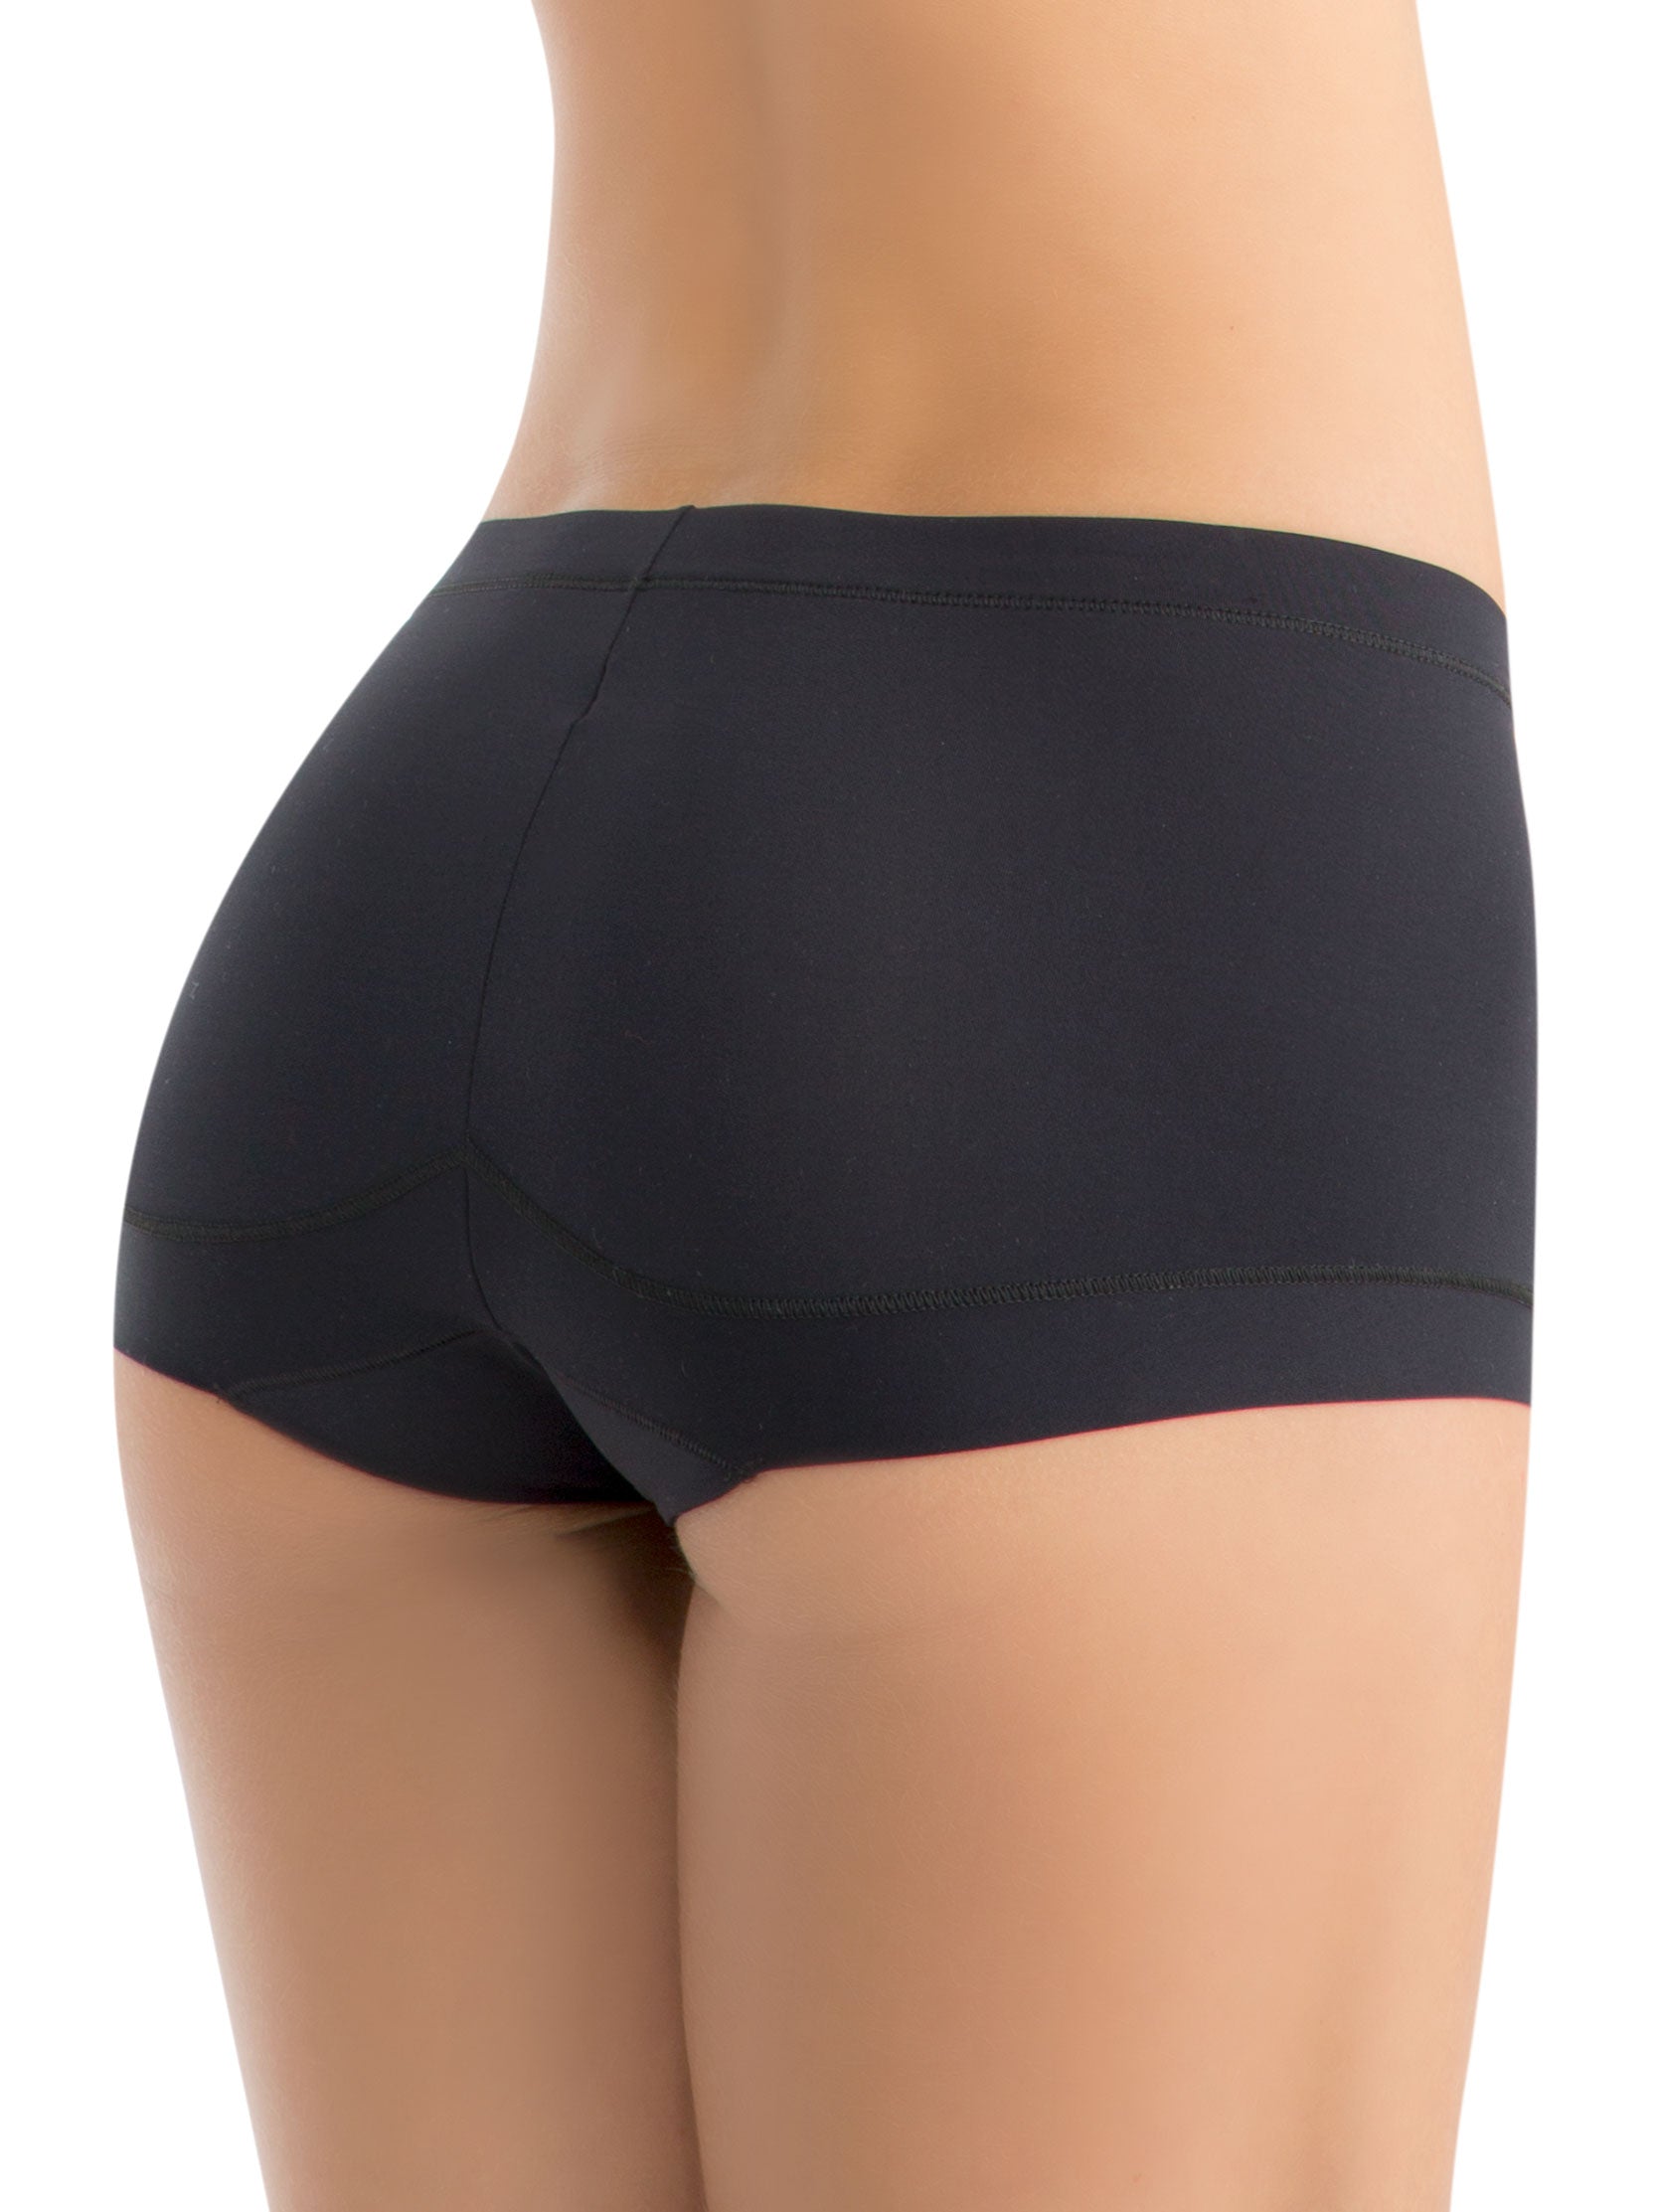 BIZIZA Women's Boyshort Underwear High Waisted Butt Lifter Shorts Hipster  Seamless Stretch Panty Black L